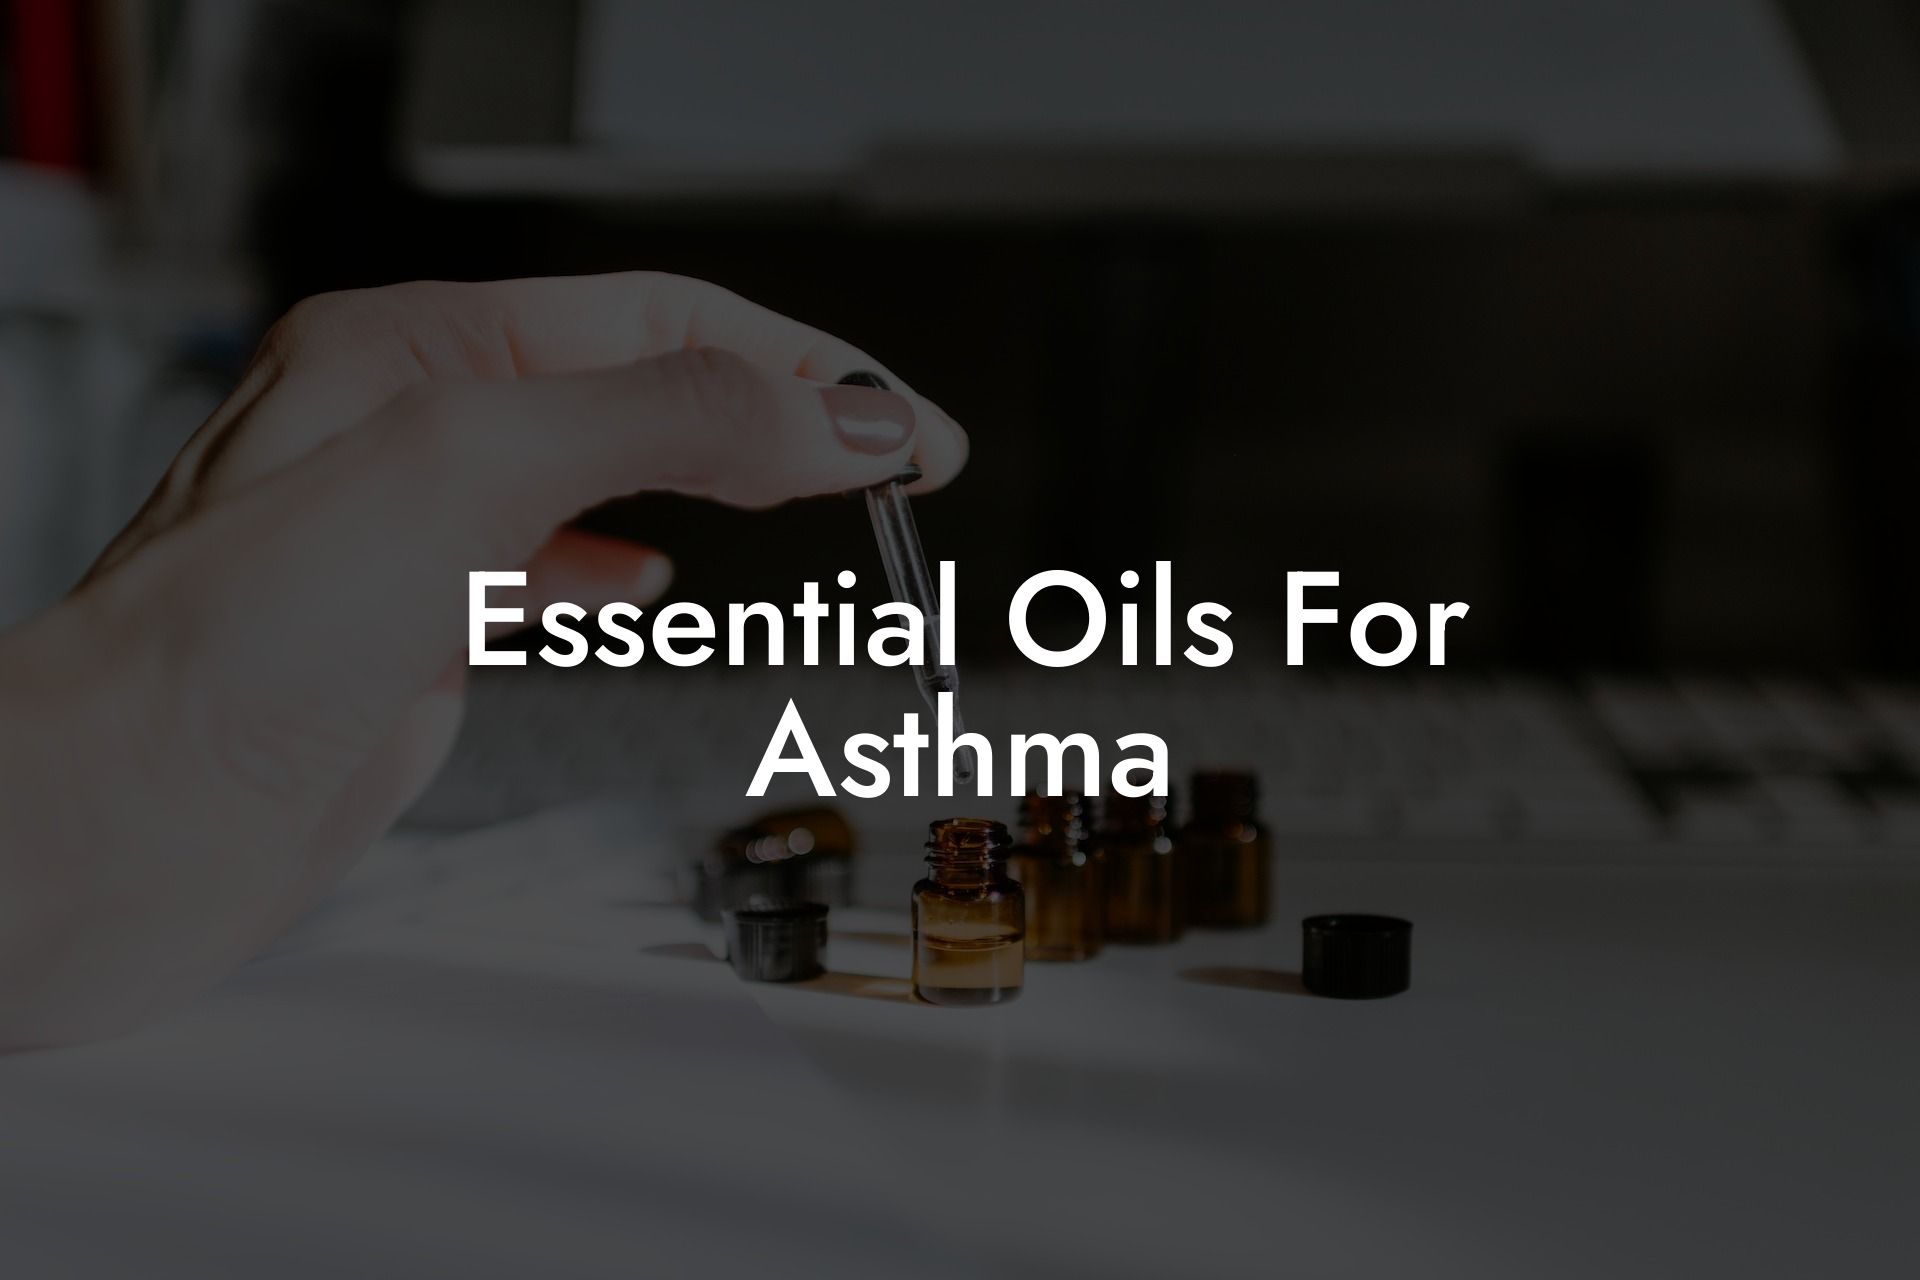 Essential Oils For Asthma